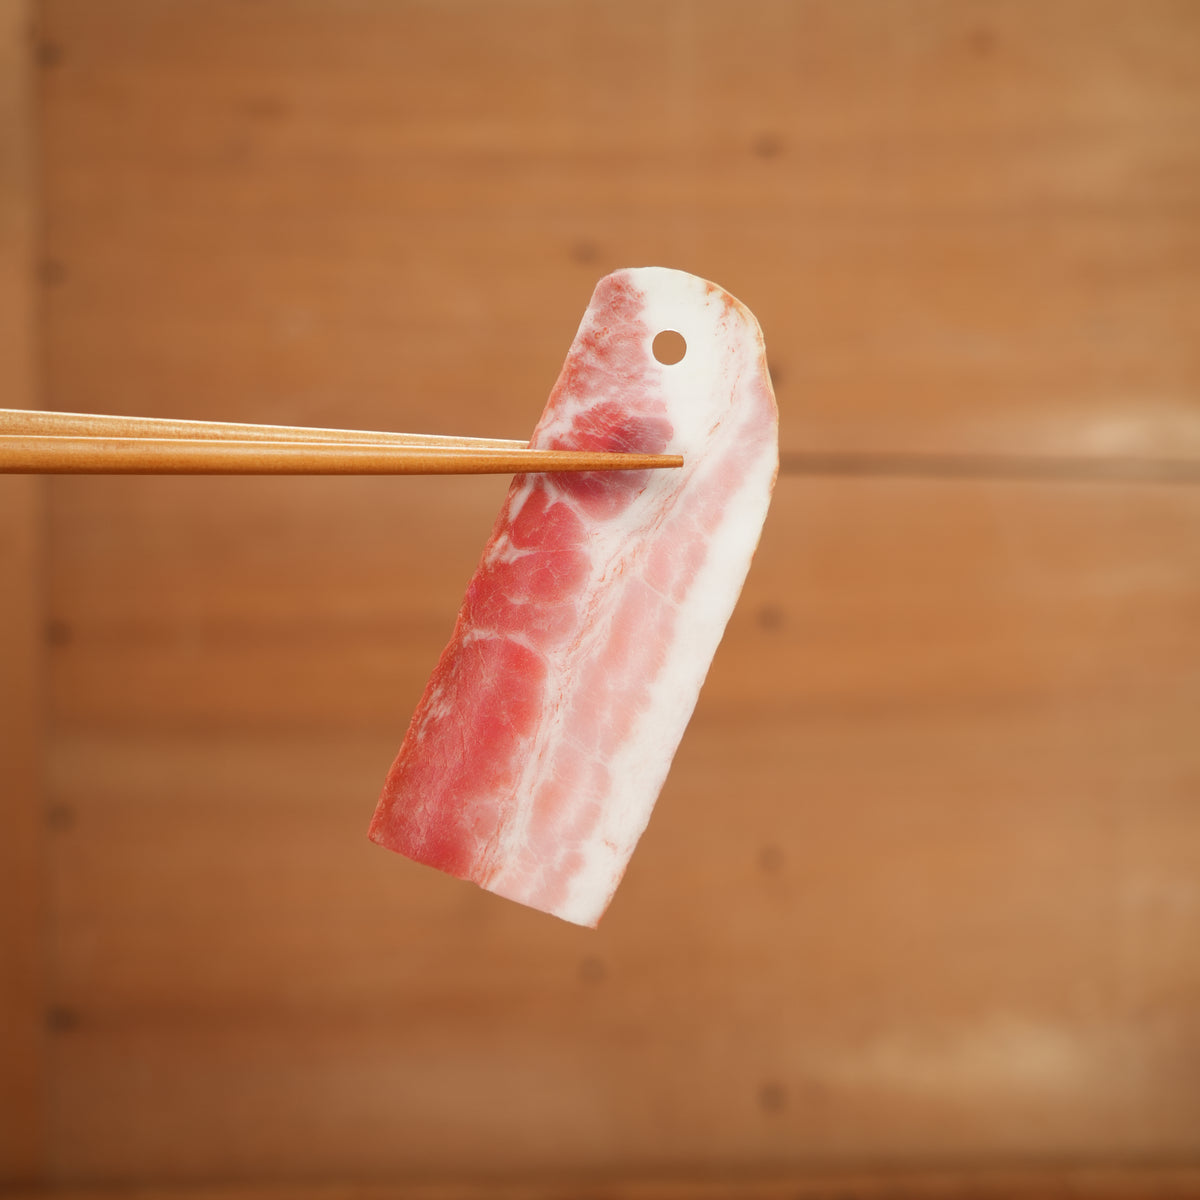 Japanese Speciality Imitation Food Bookmark